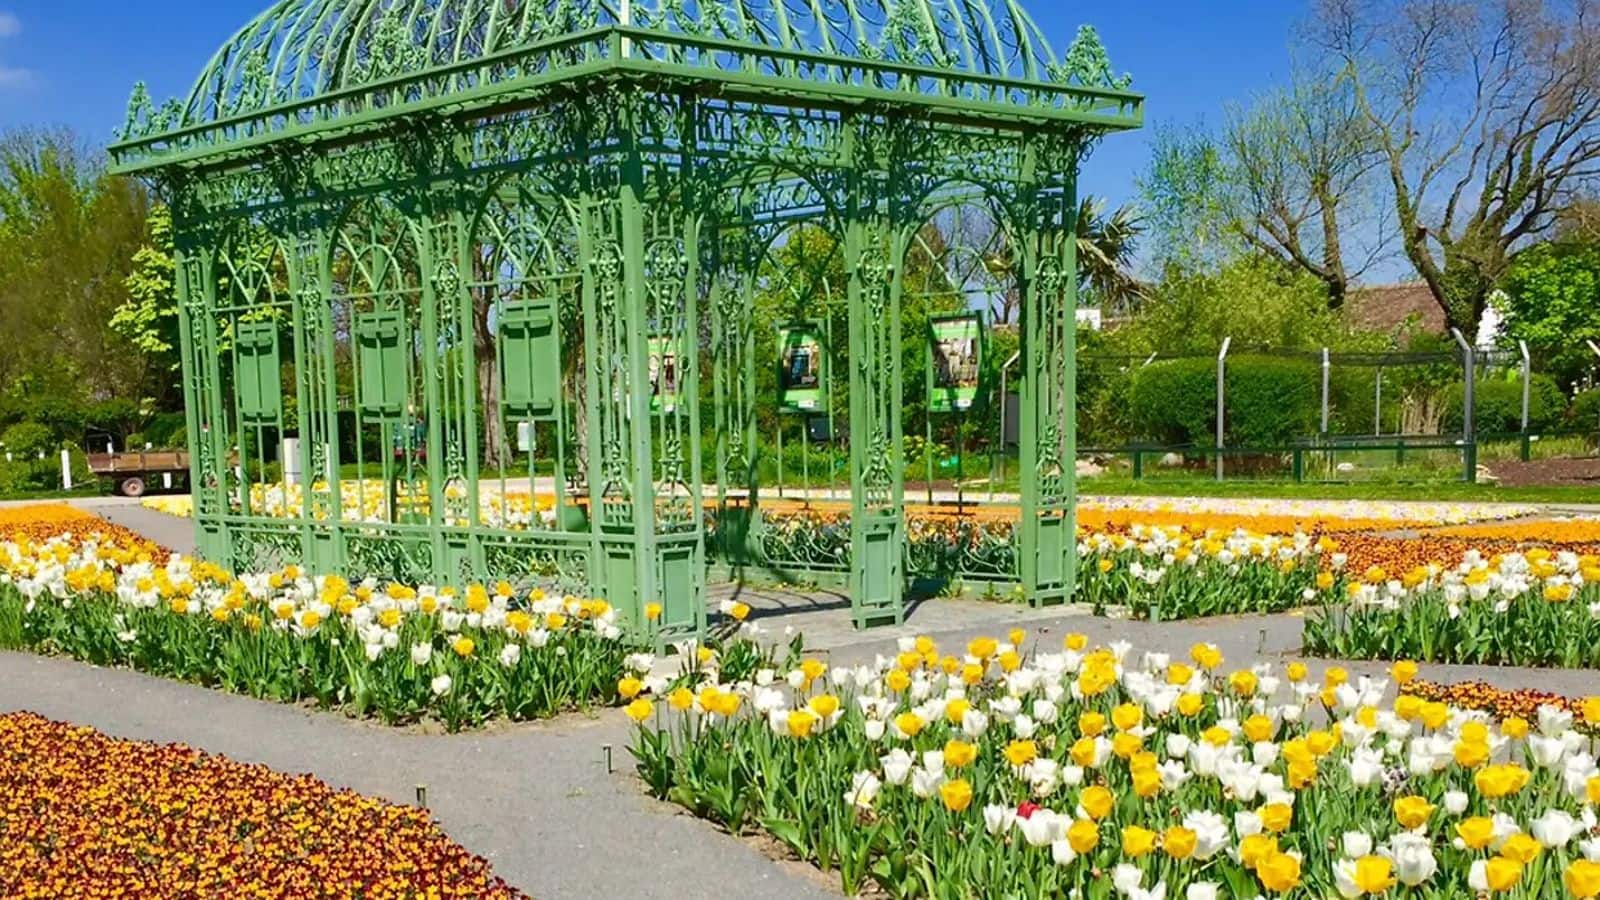 Explore Vienna's enchanting spring gardens